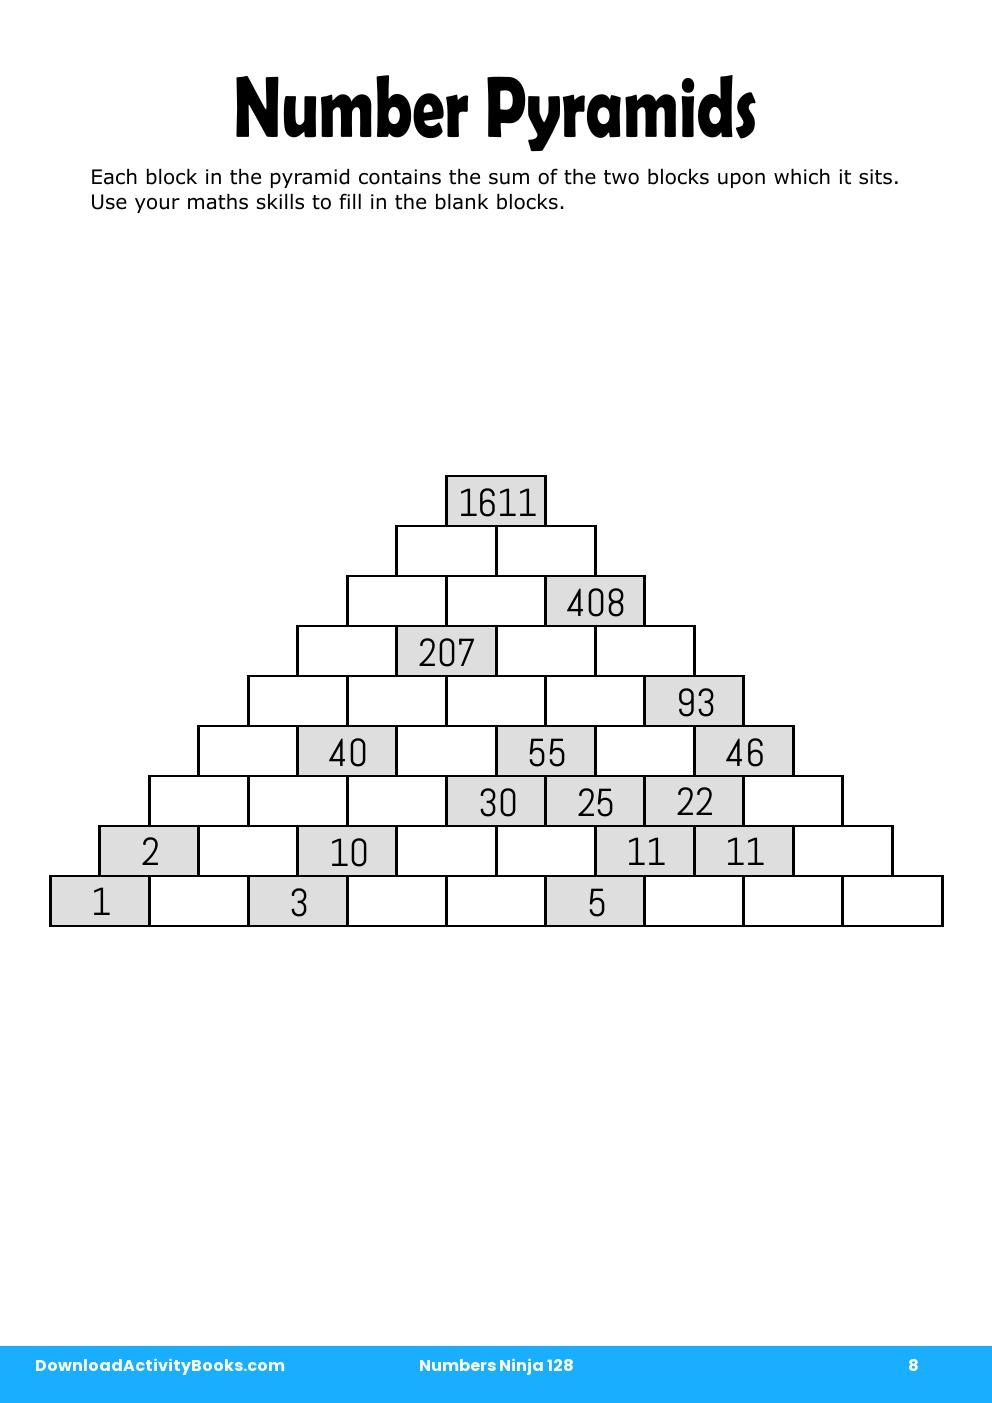 Number Pyramids in Numbers Ninja 128